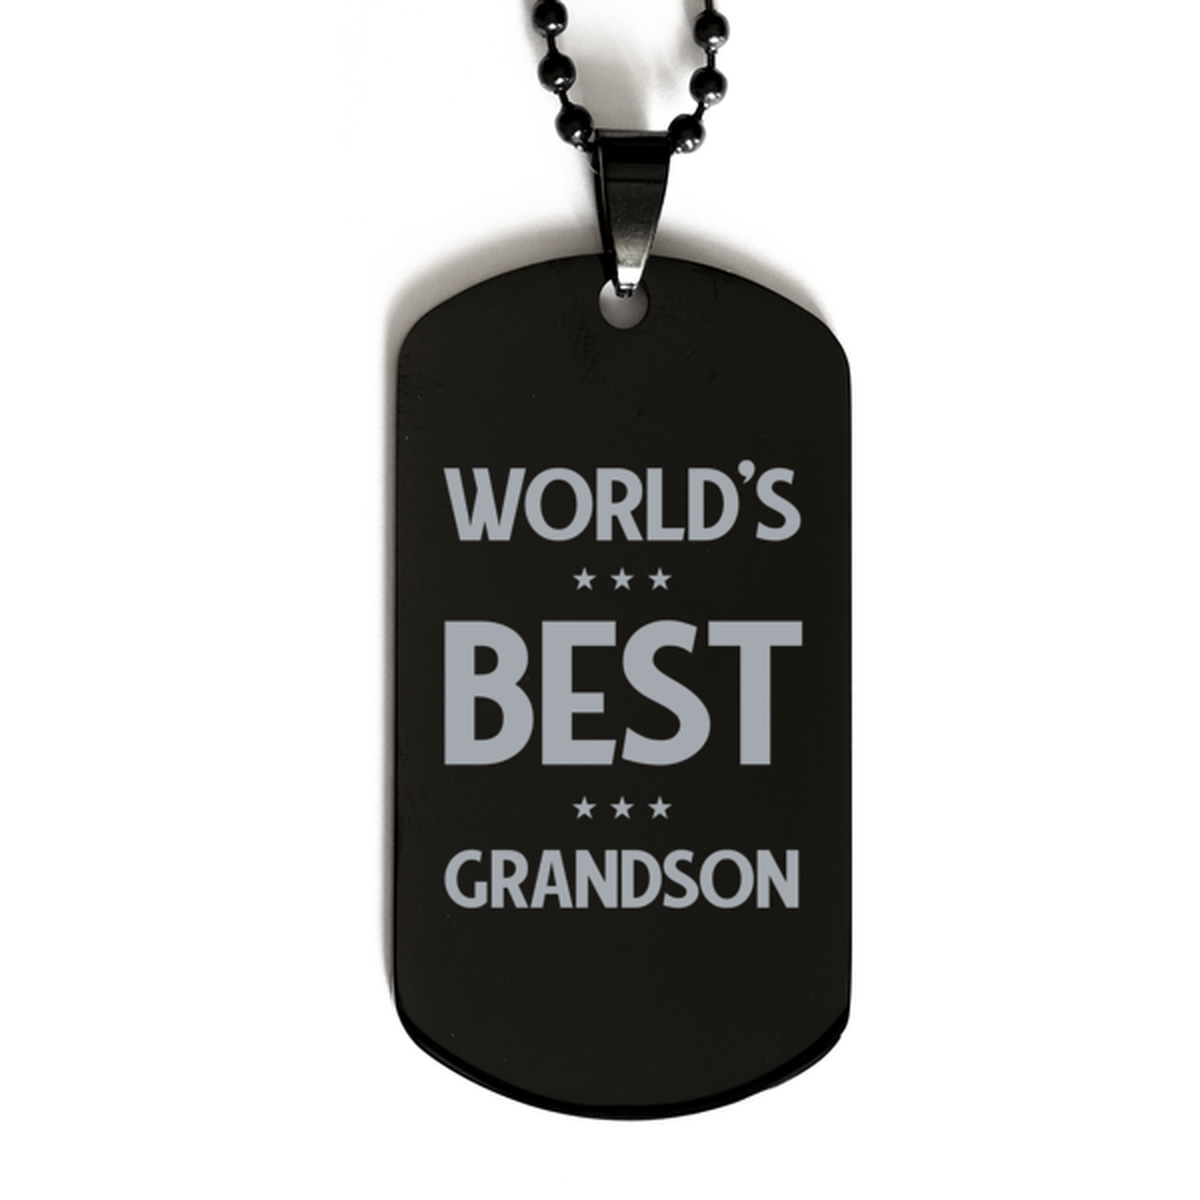 Worlds Best Grandson Gifts, Funny Black Engraved Dog Tag For Grandson, Birthday Presents For Men